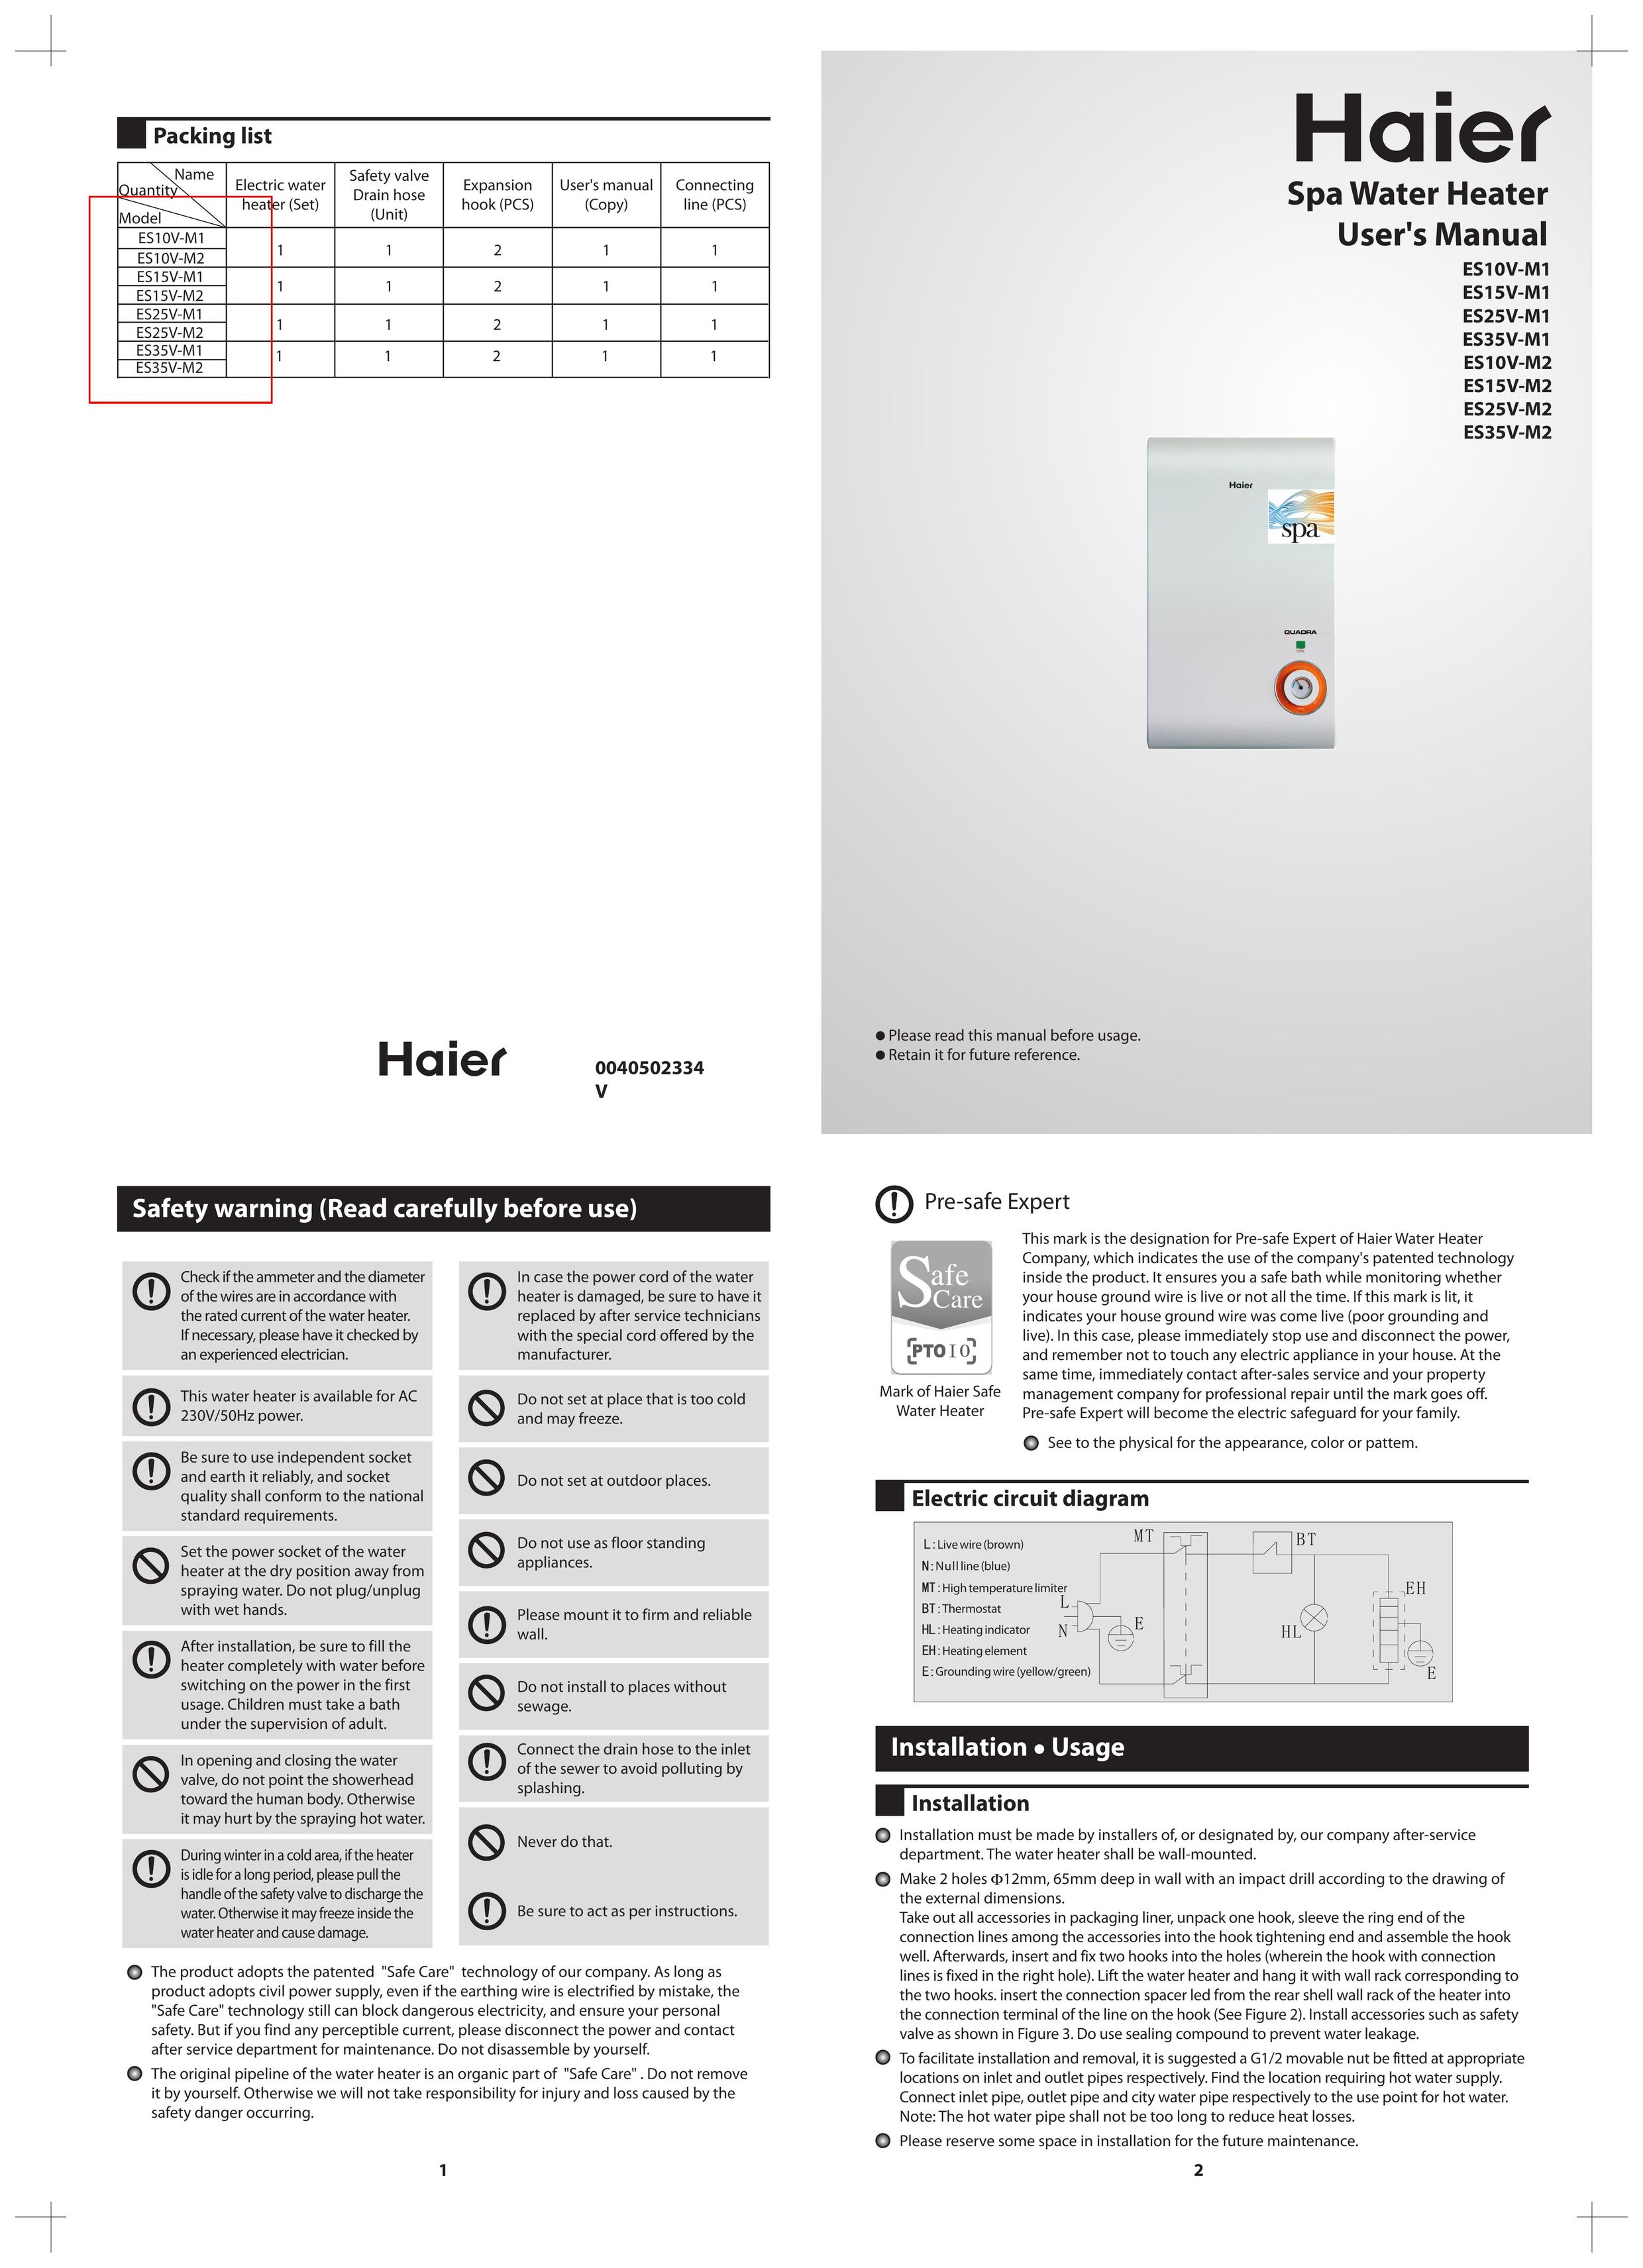 Haier ES35V-M2 Water Heater User Manual